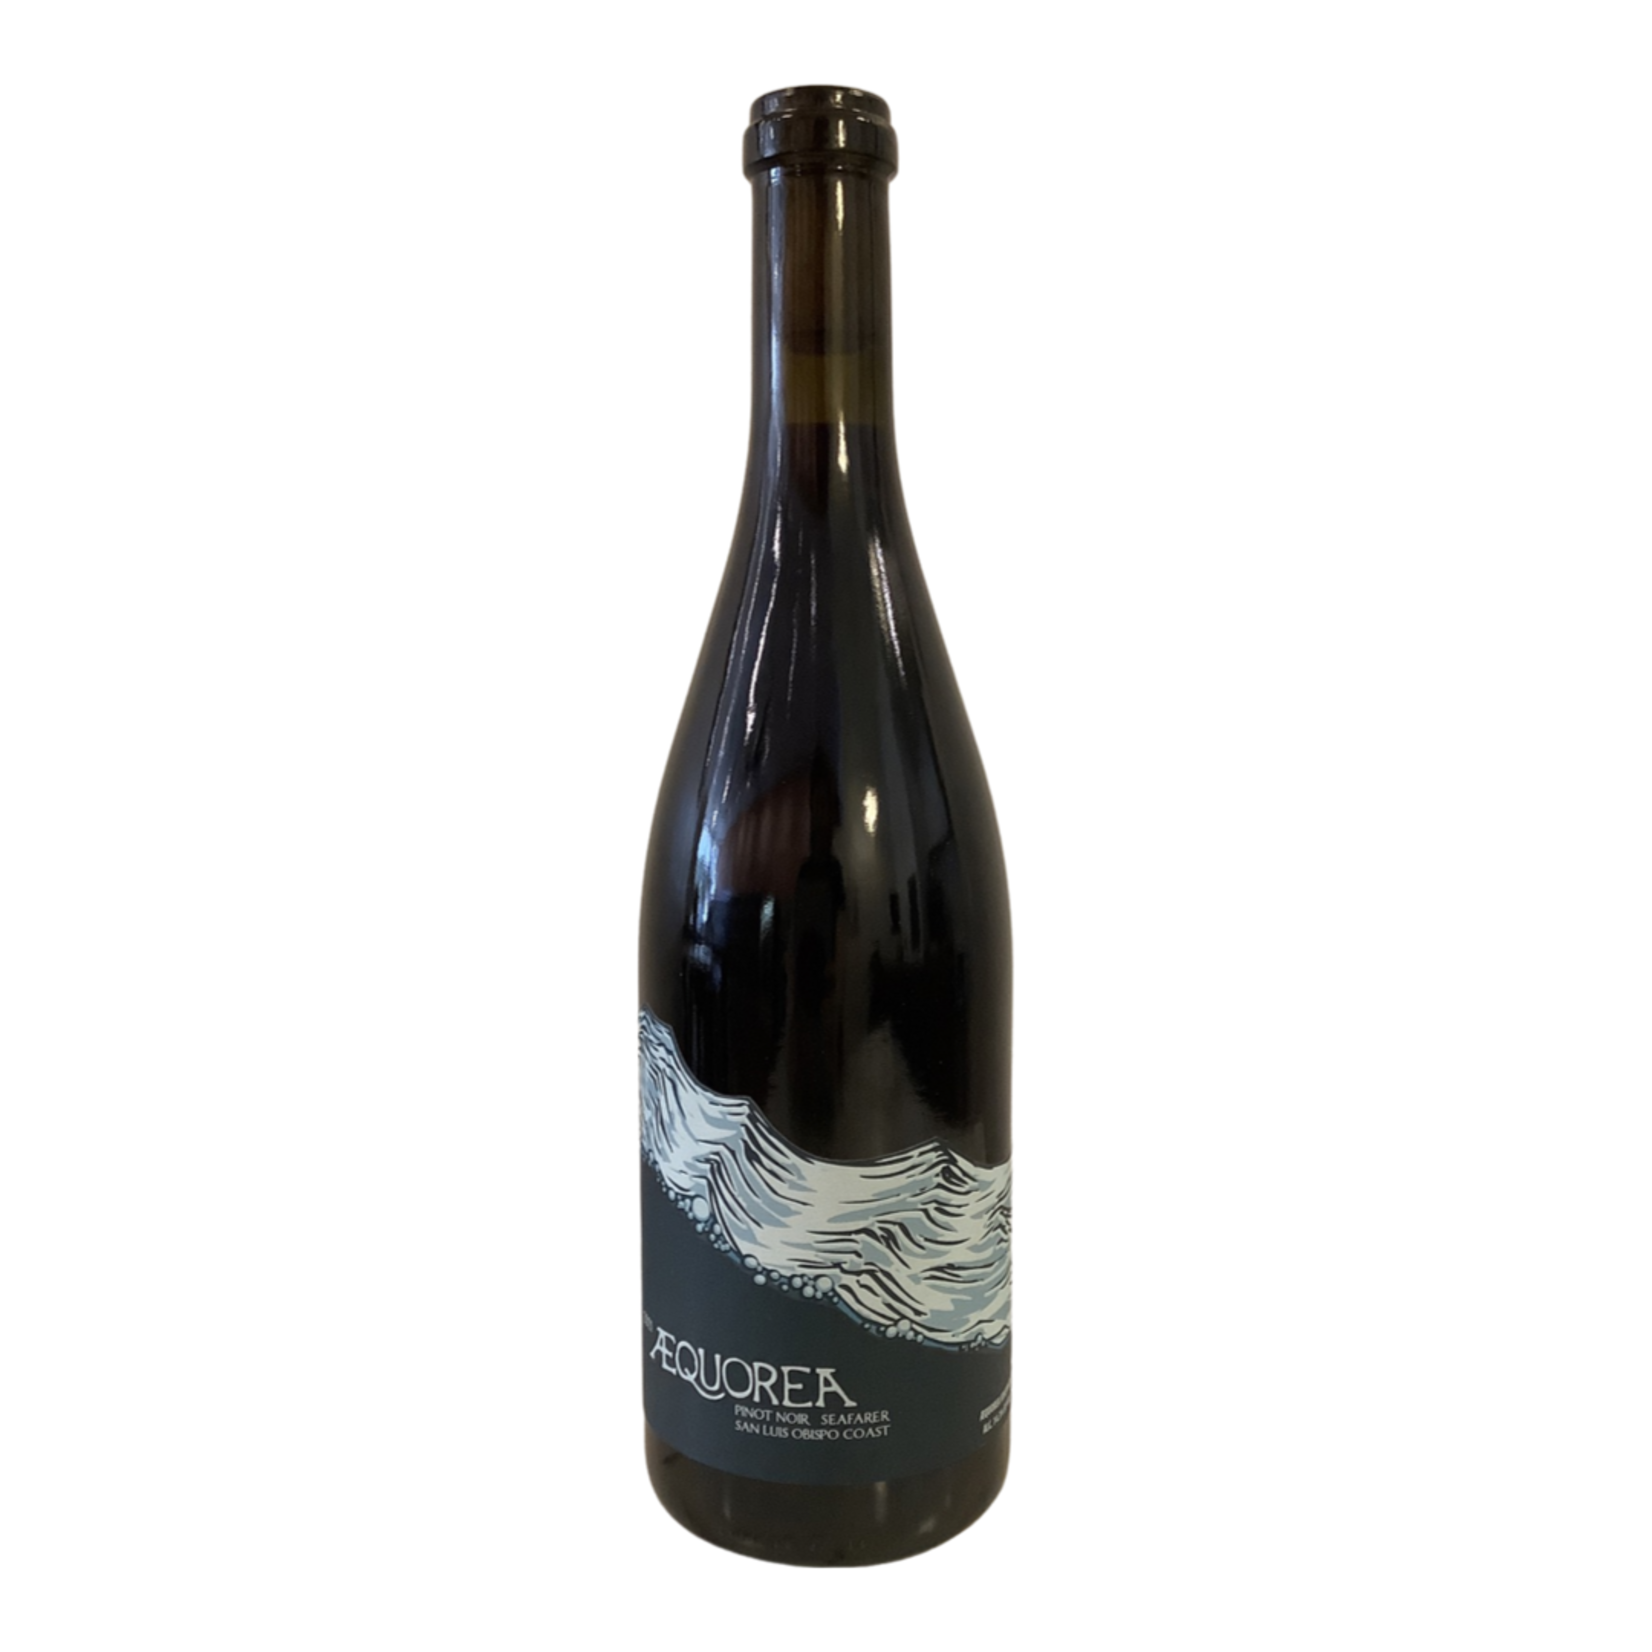 2021 Aaron Wines "Aequorea" | "Seafarer" Pinot Noir, San Luis Obispo CA